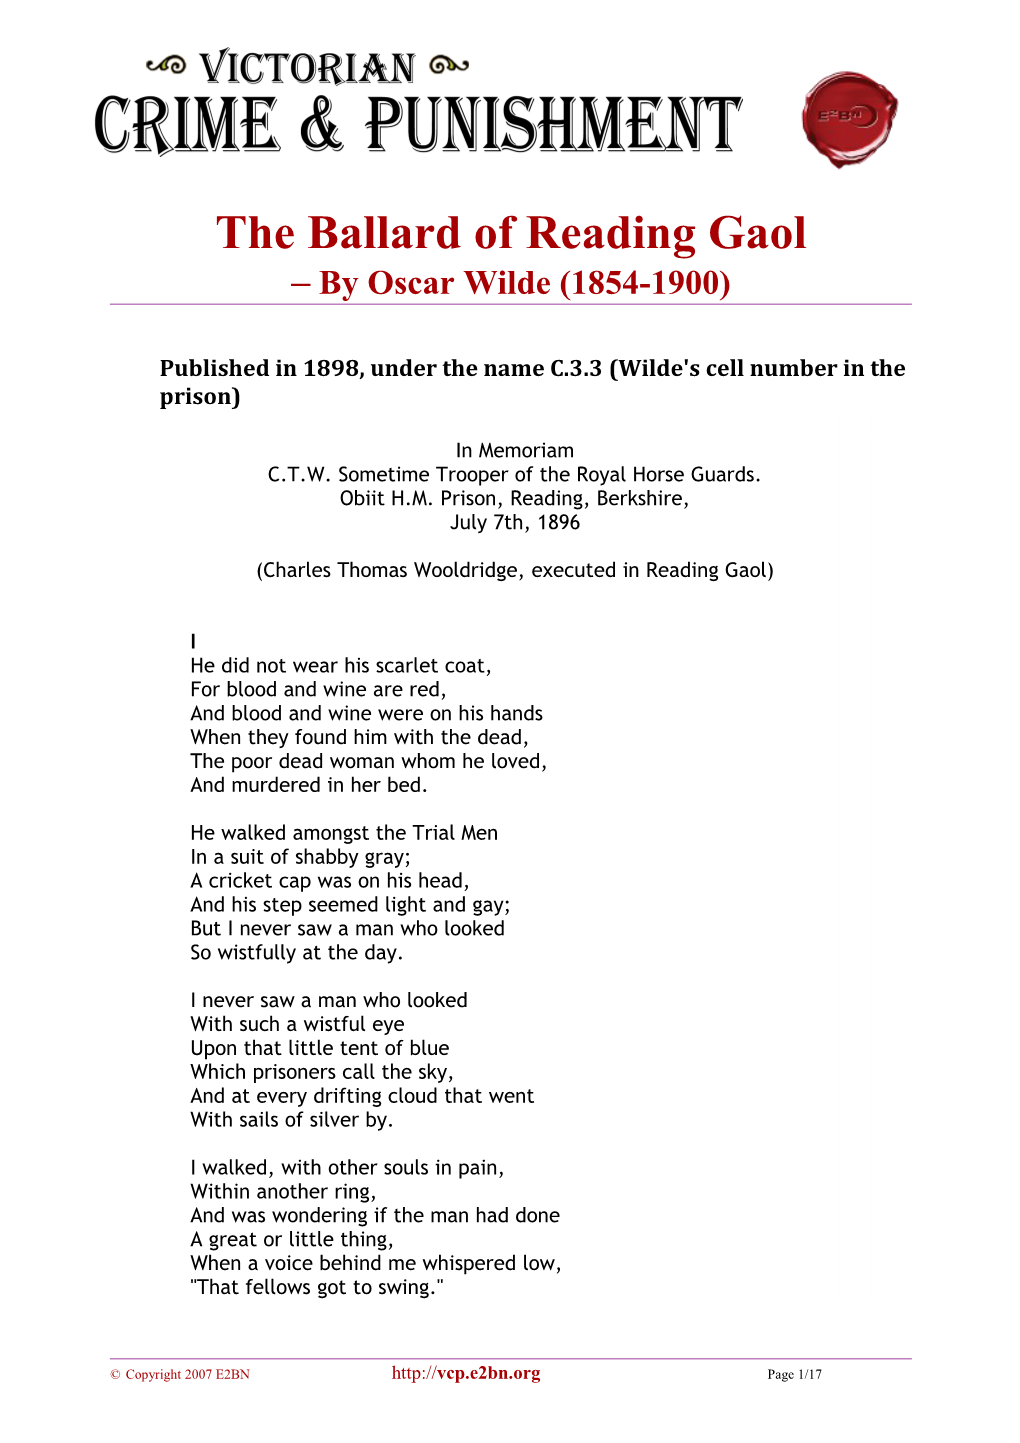 The Ballard of Reading Gaol